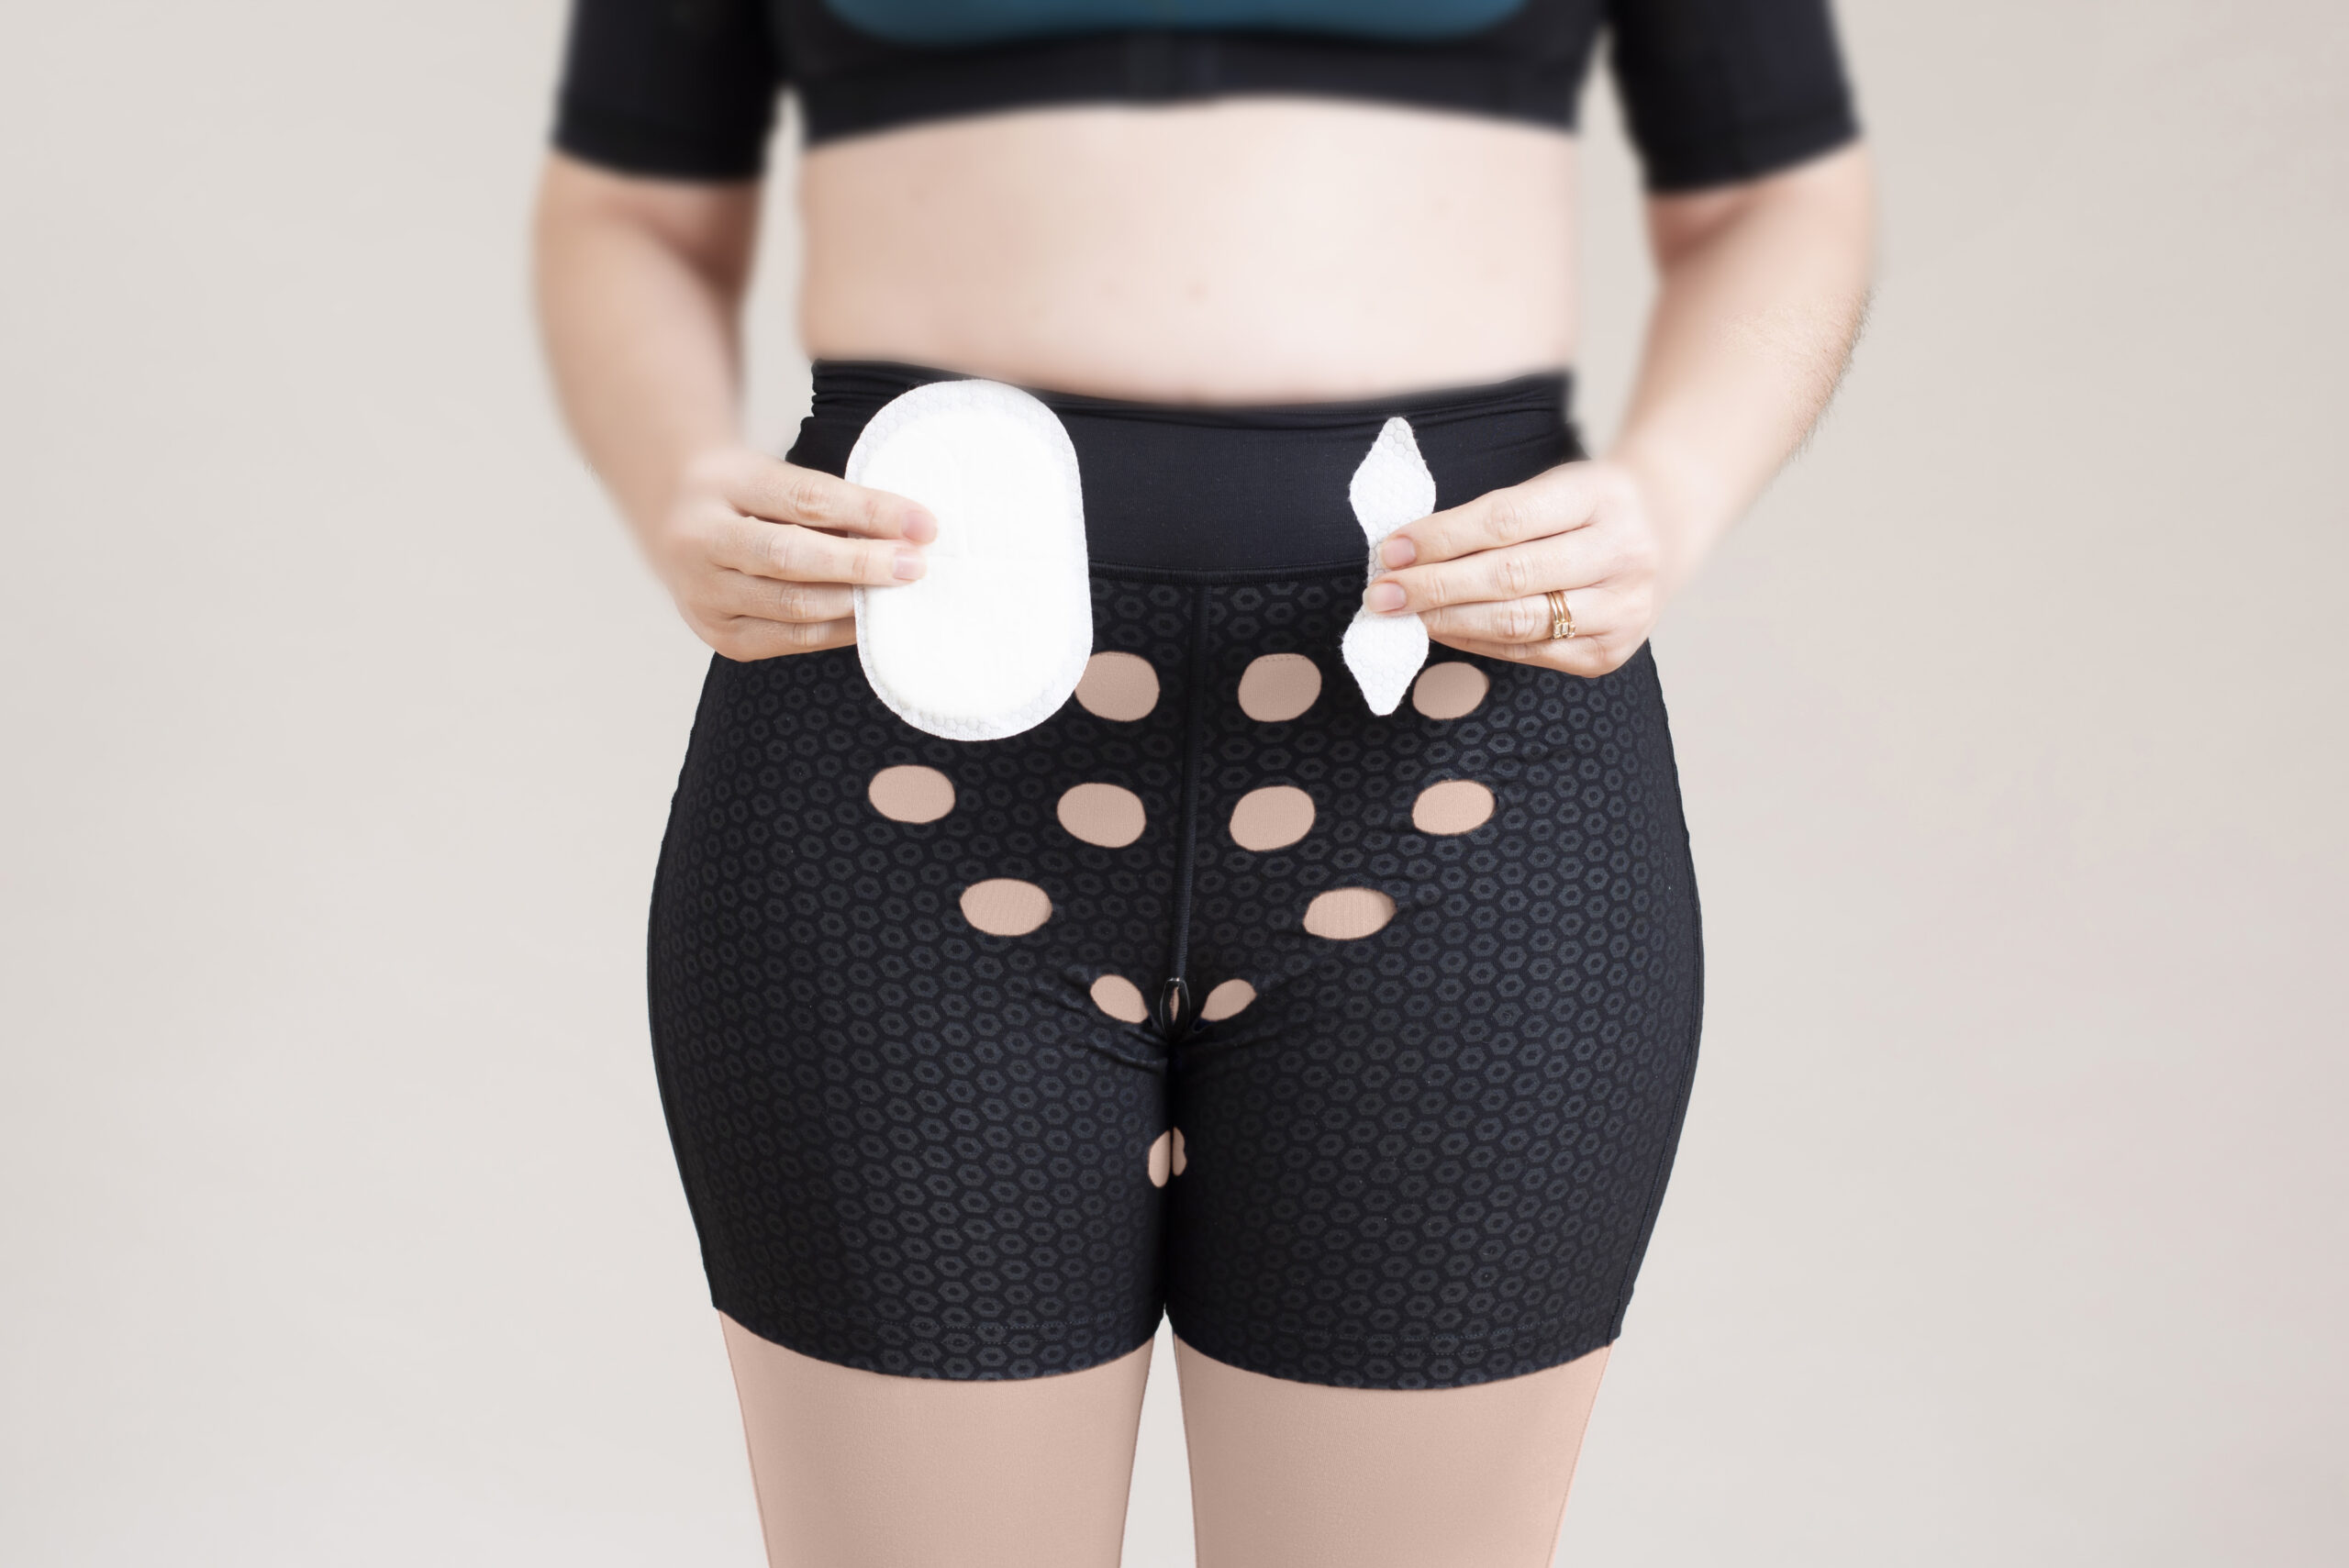 HidraWear Briefs For Women  Breathable & Body Conforming